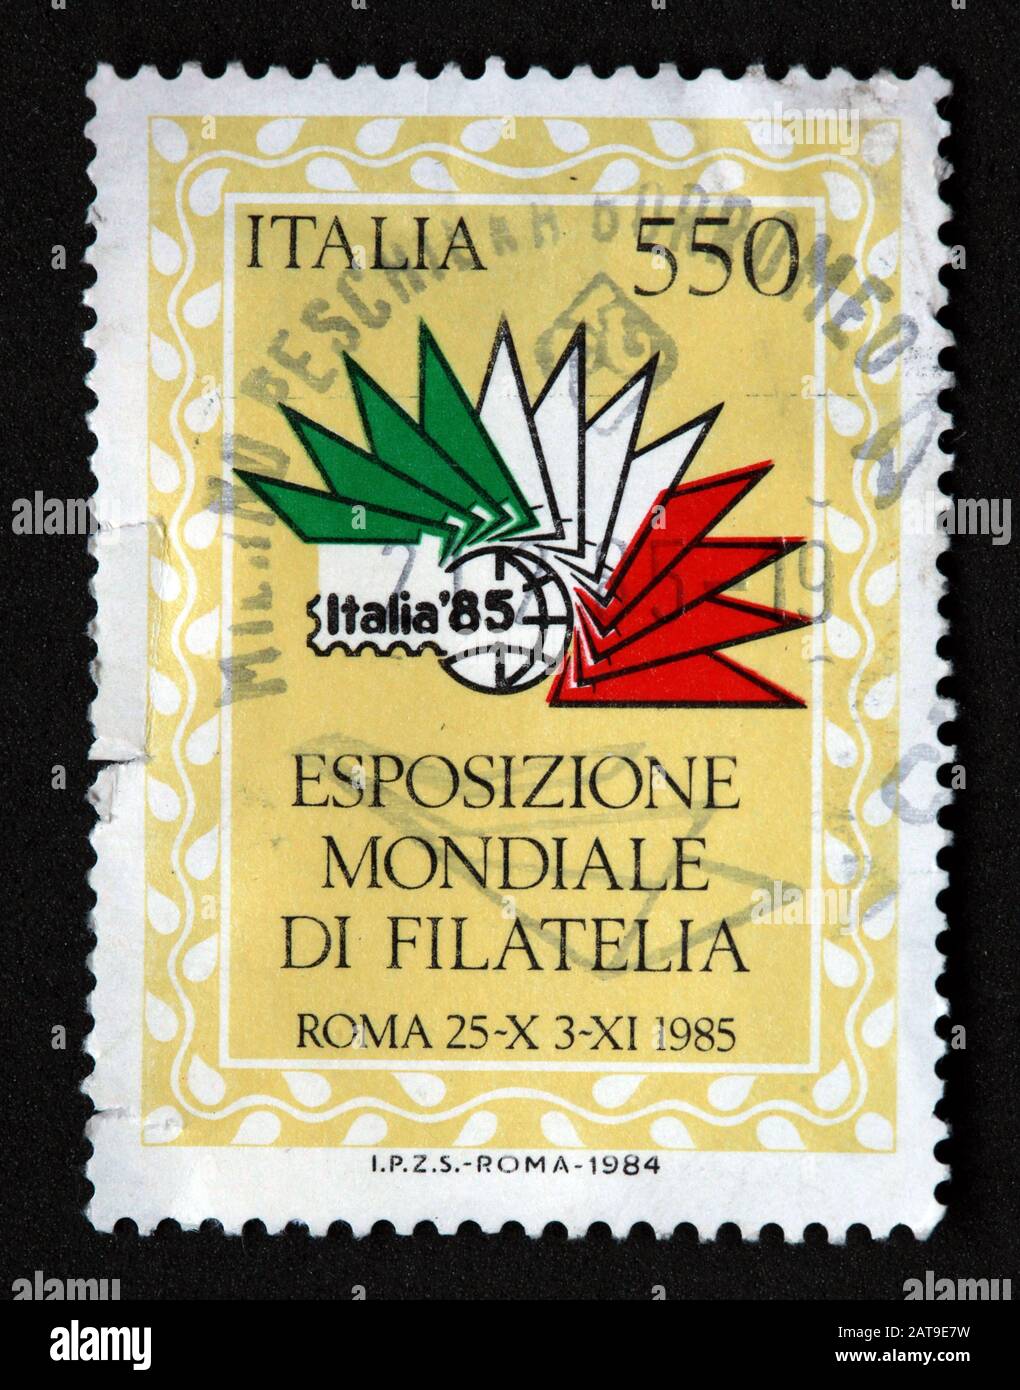 Italian stamp, poste Italia used and franked stamp, Italia 550lire Italia85 Esposizione mondiale di Filatelia - Roma 25-X 3-XI, 1985 Stock Photo